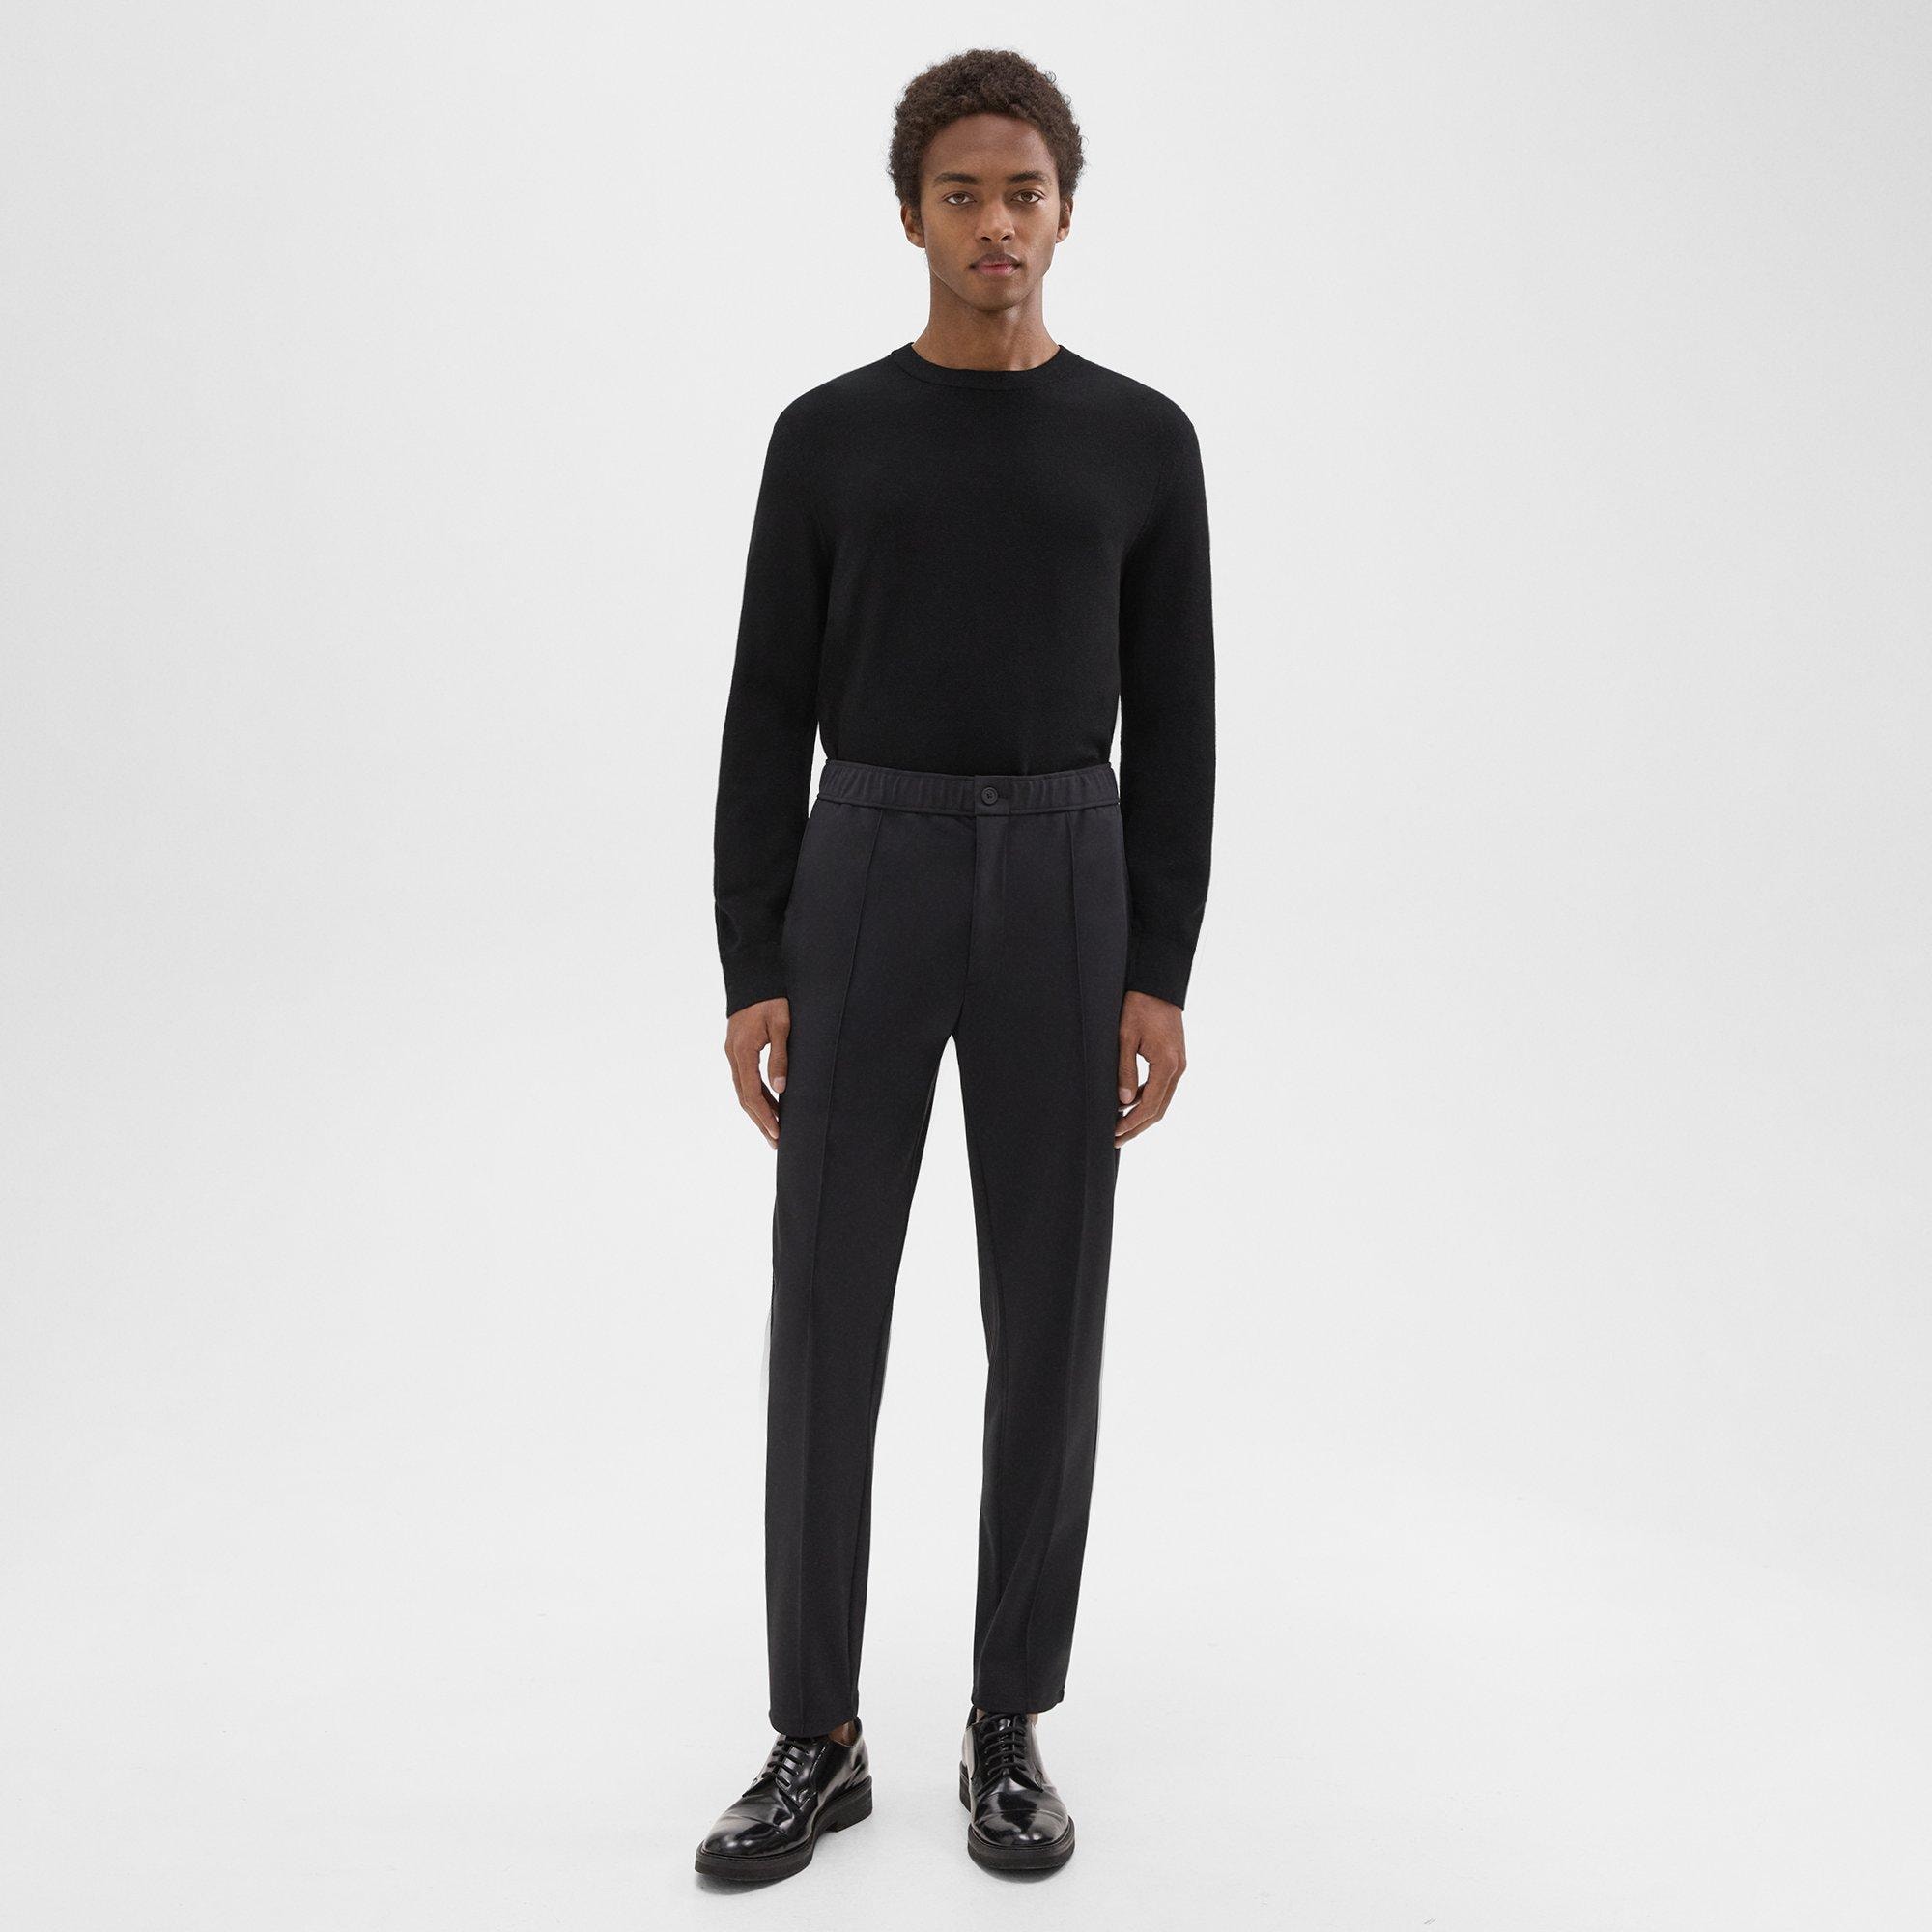 Buy New Balance mens core knit pants black Online